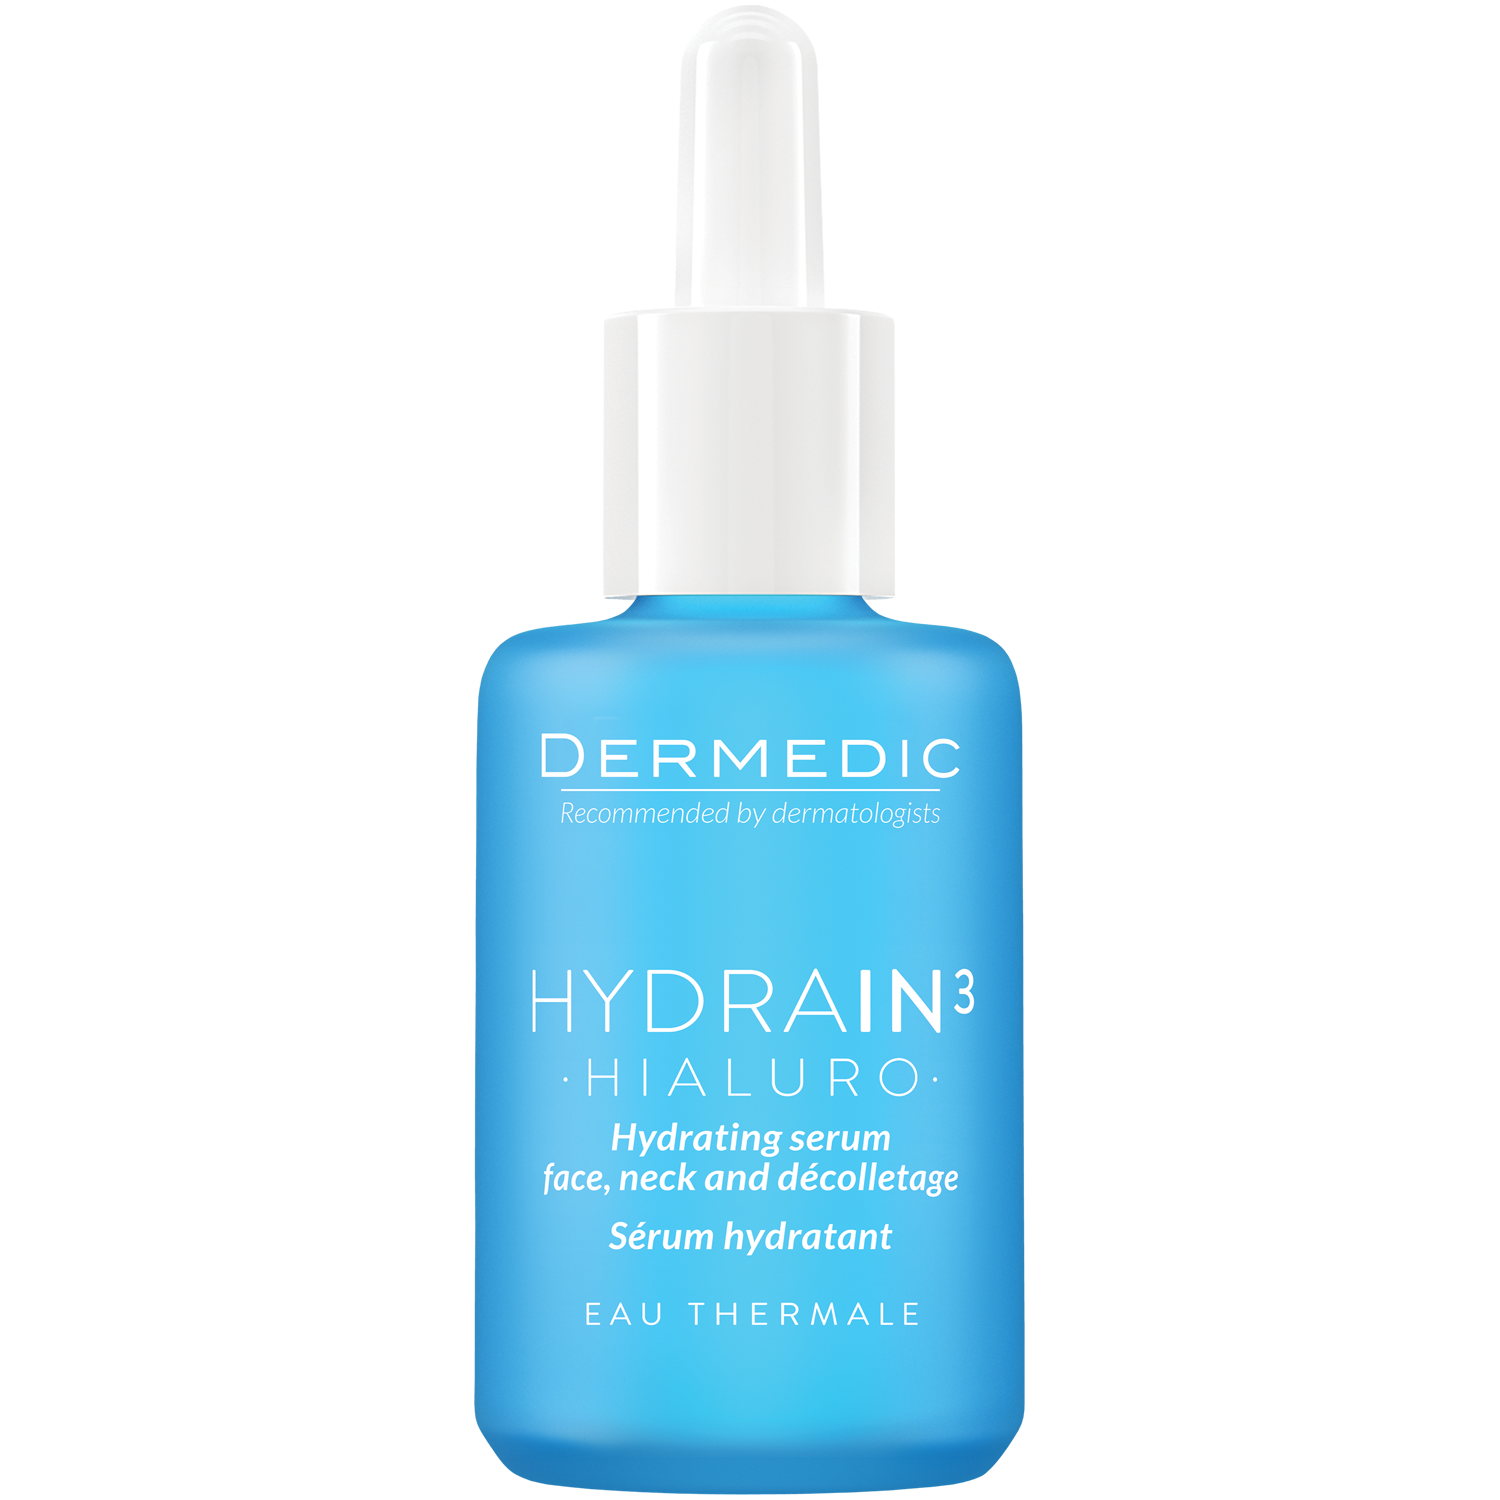 Dermedic Hydrain3 Hialuro увлажняющая сыворотка для лица, шеи и зоны декольте, 30 мл